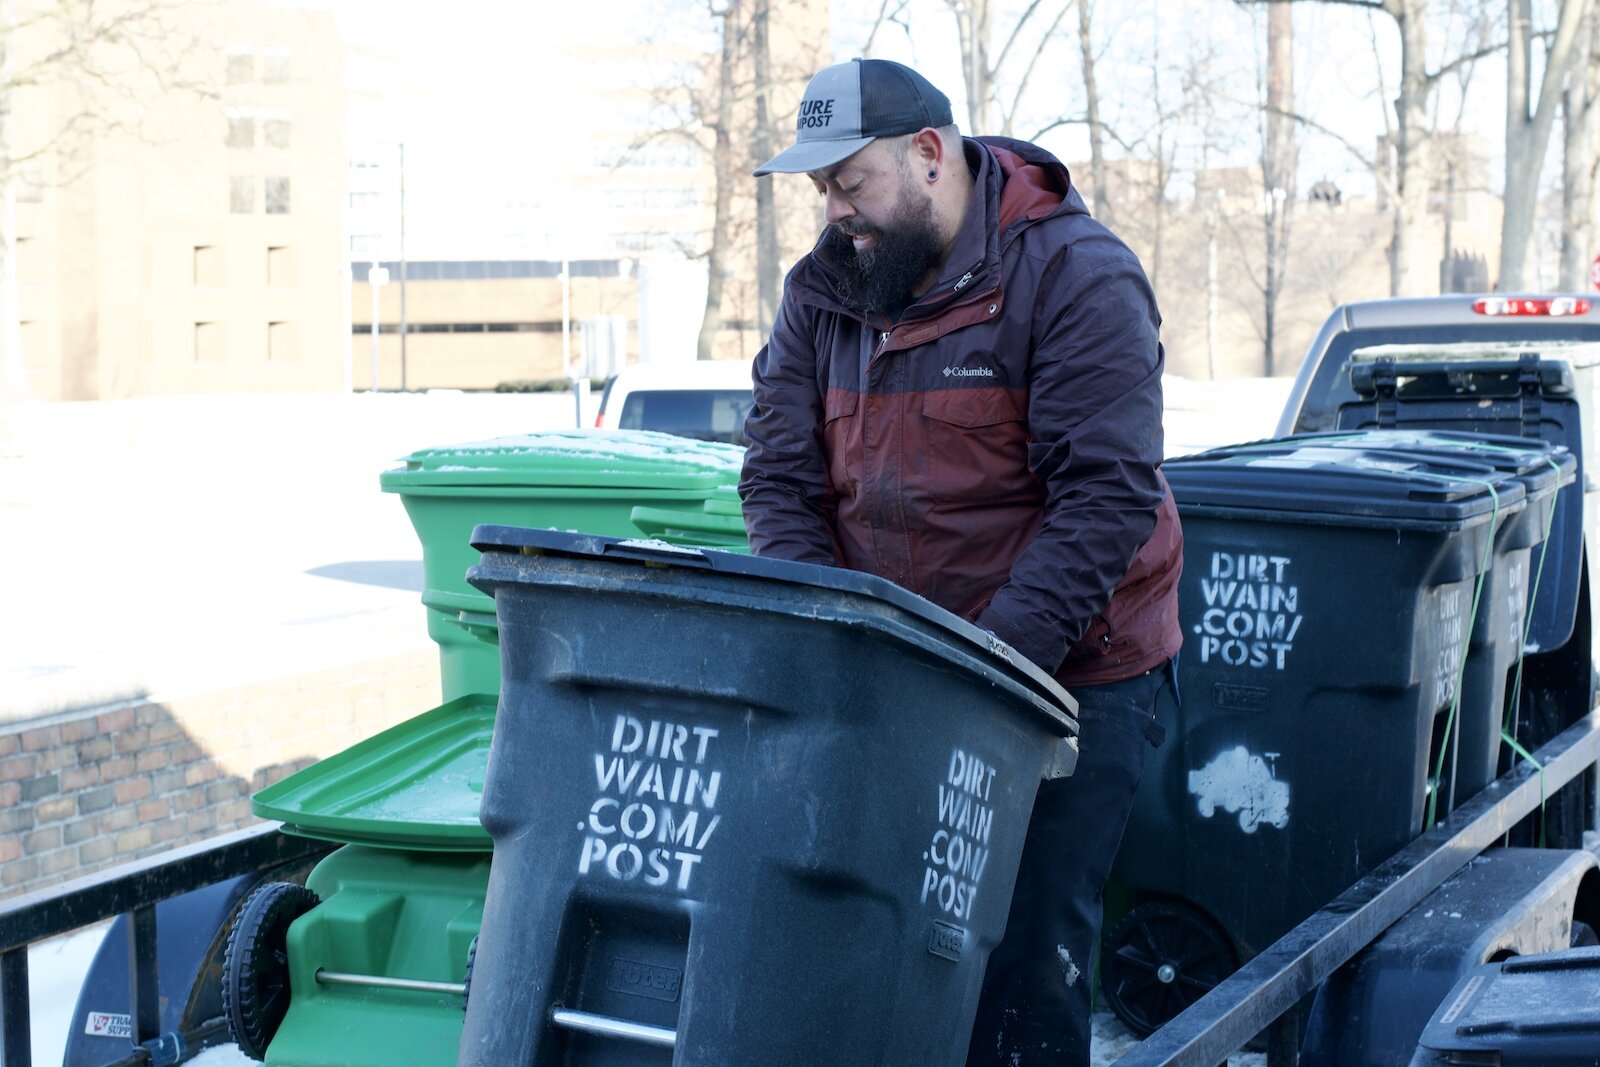 Dirt Wain’s Founder Brett Bloom loads compost bins into a pickup truck.